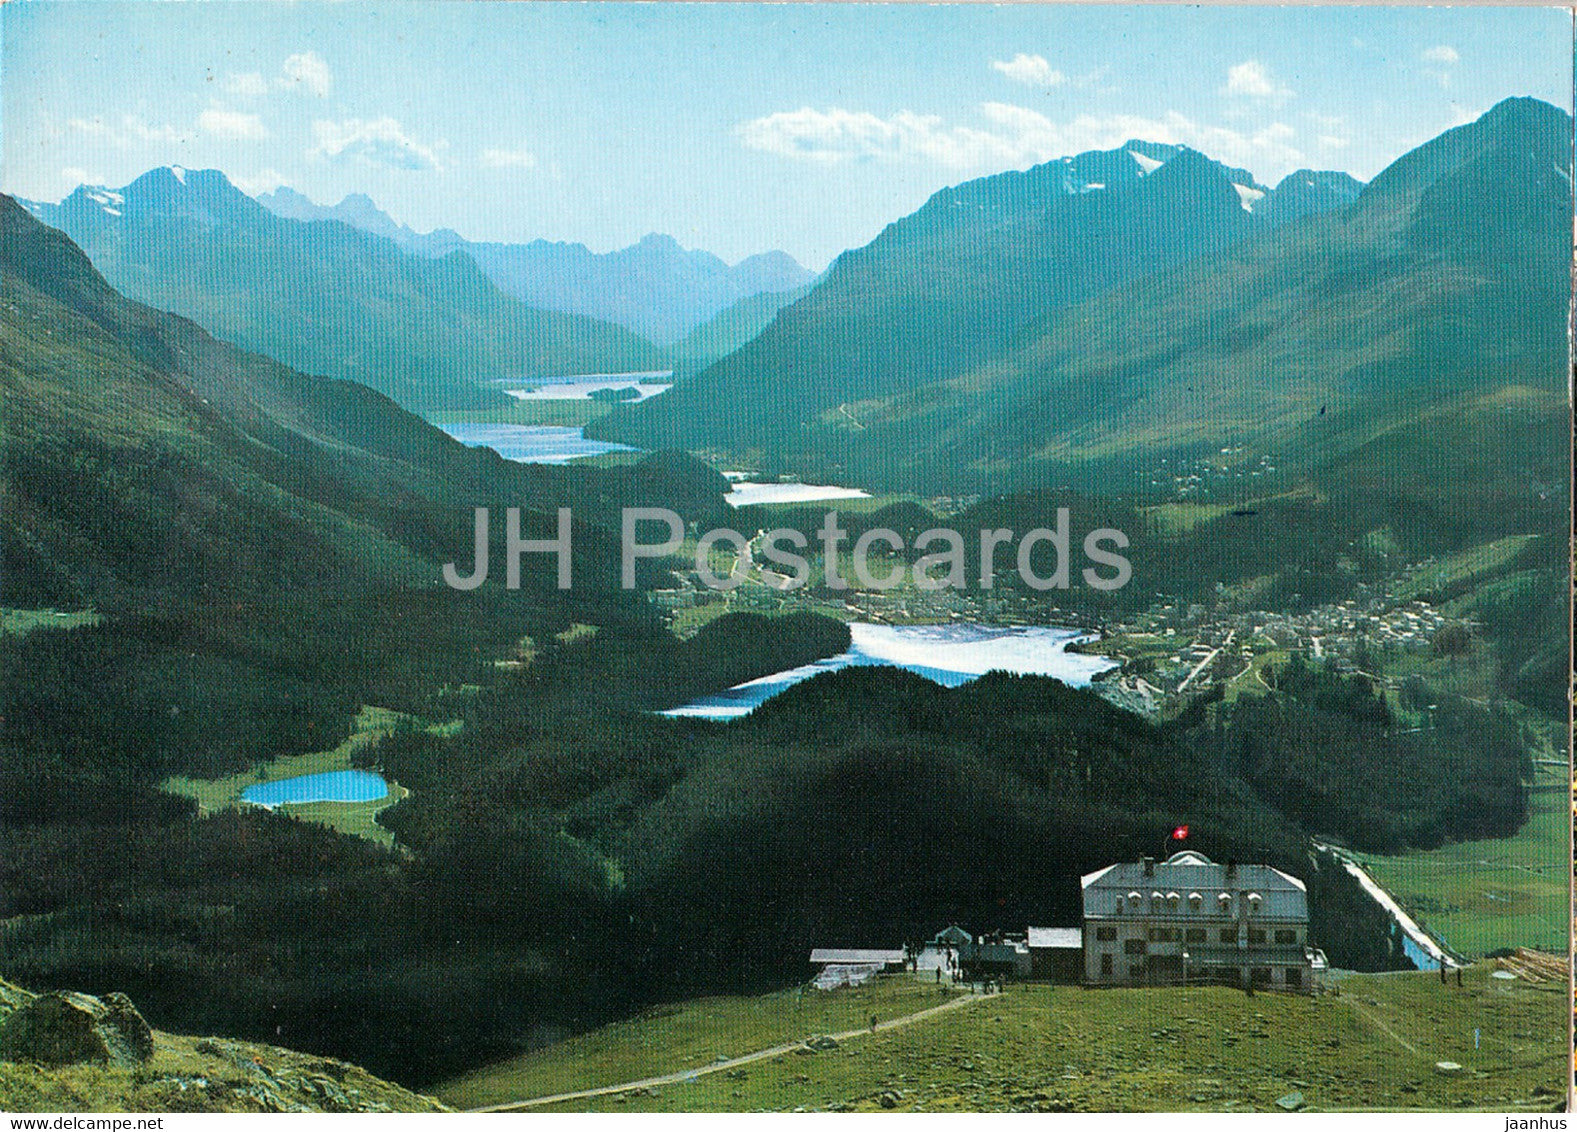 Muottas Muragl 2450 m mit Oberengadiner Seen - 132 - Switzerland - unused - JH Postcards